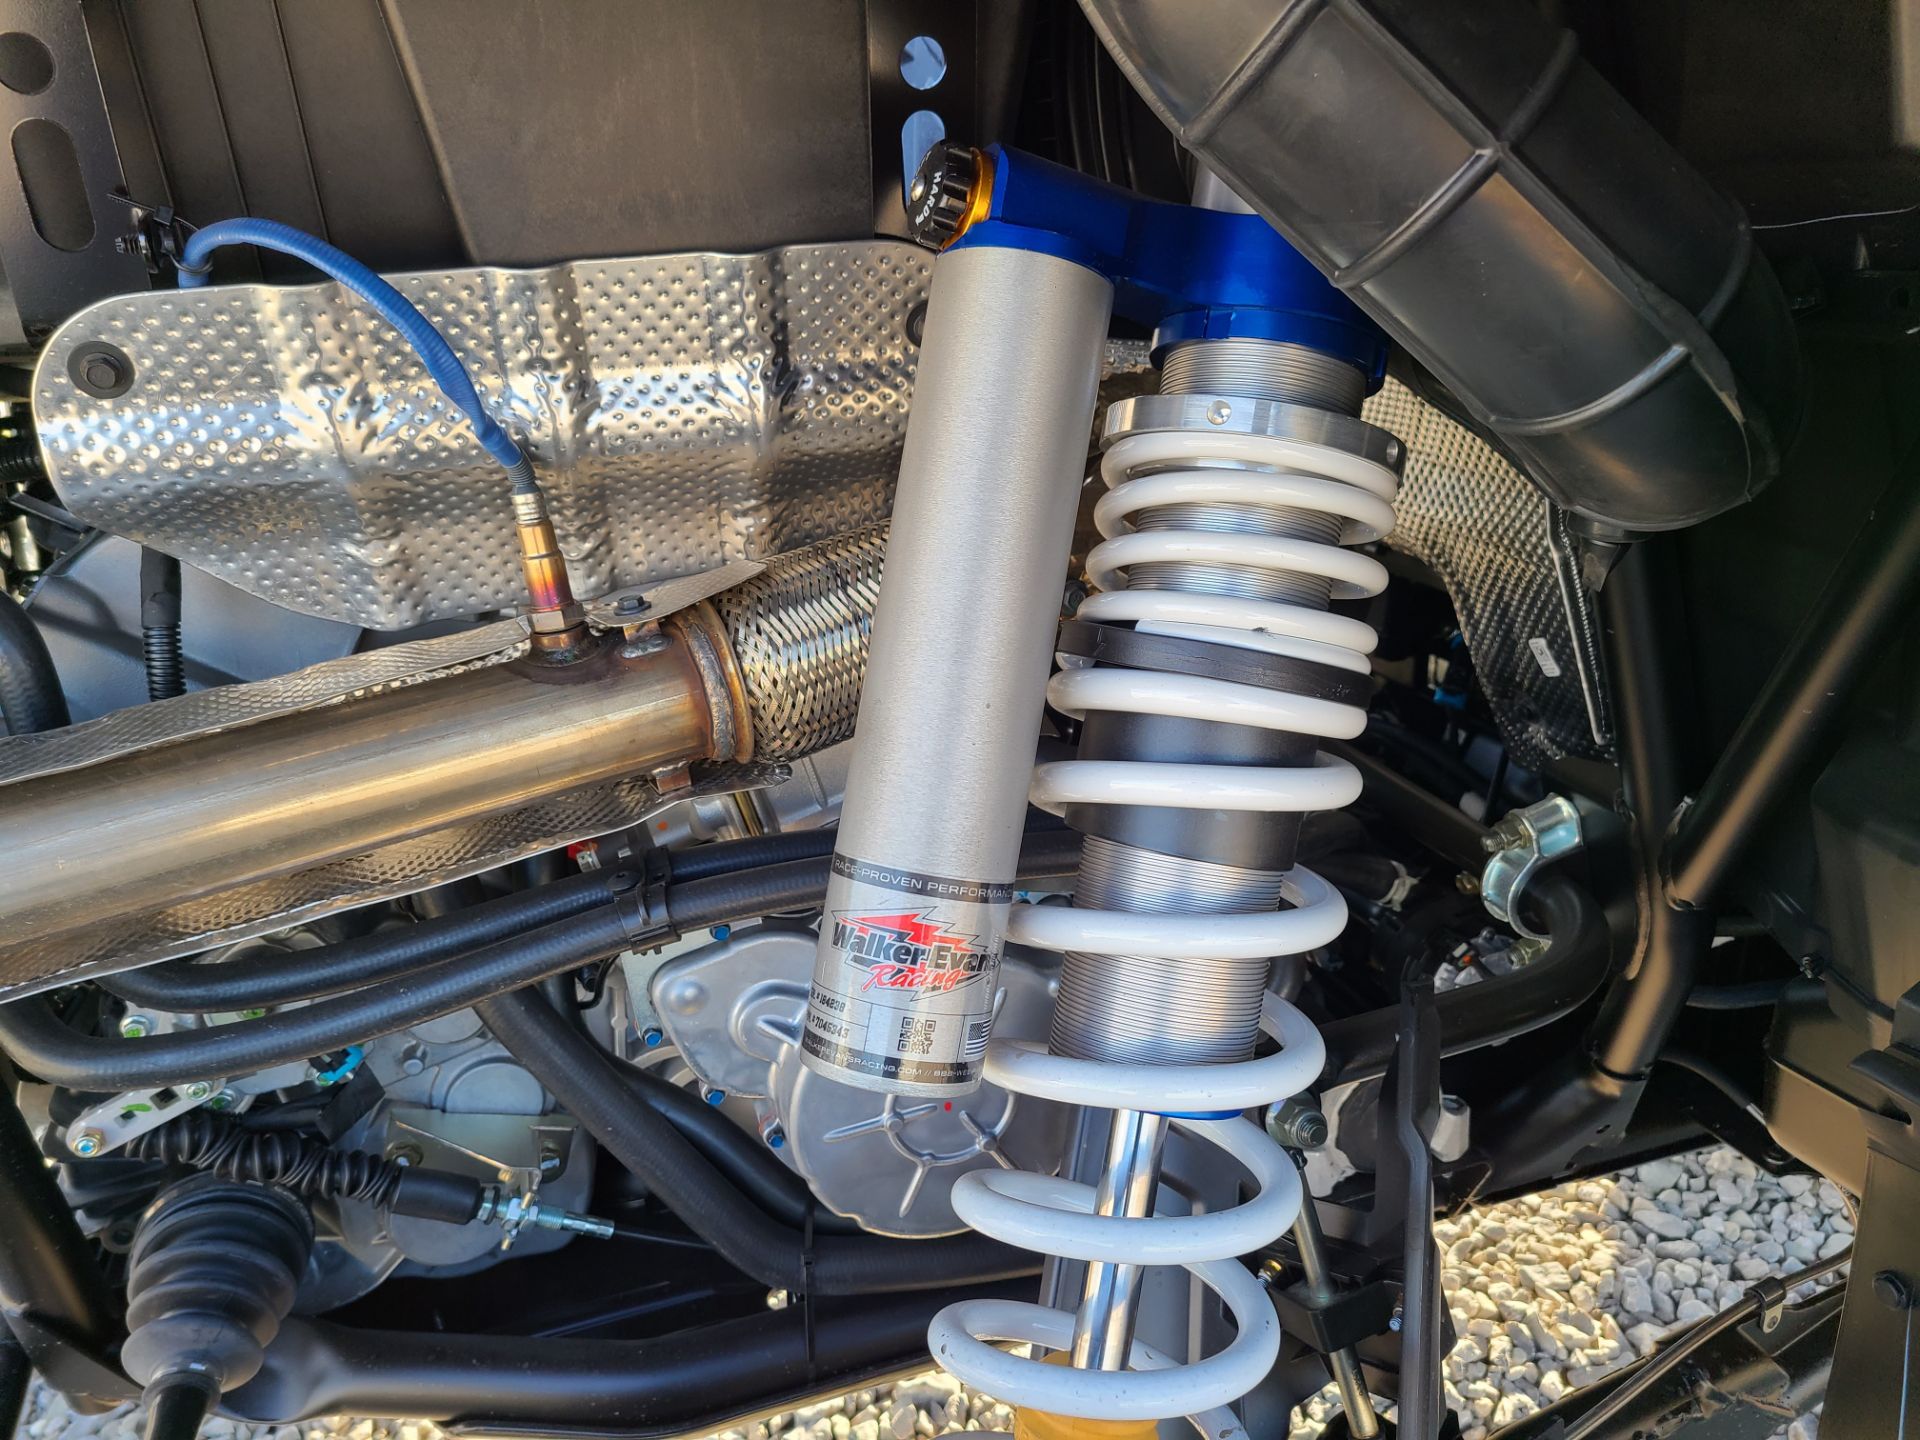 2021 Polaris RZR Turbo S Velocity in Cambridge, Ohio - Photo 6